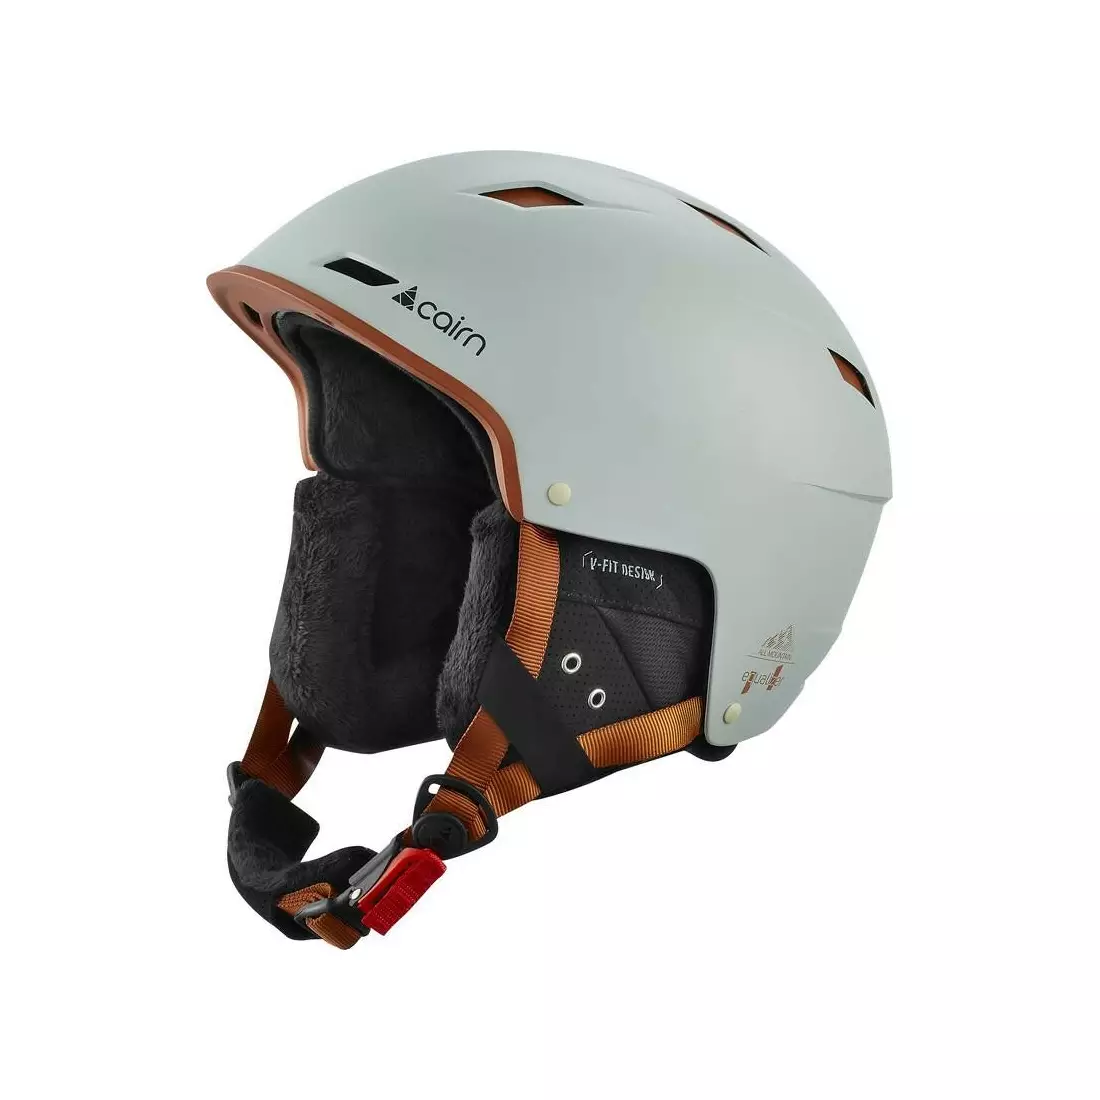 CAIRN winter ski / snowboard helmet EQUALIZER grey 060566017956